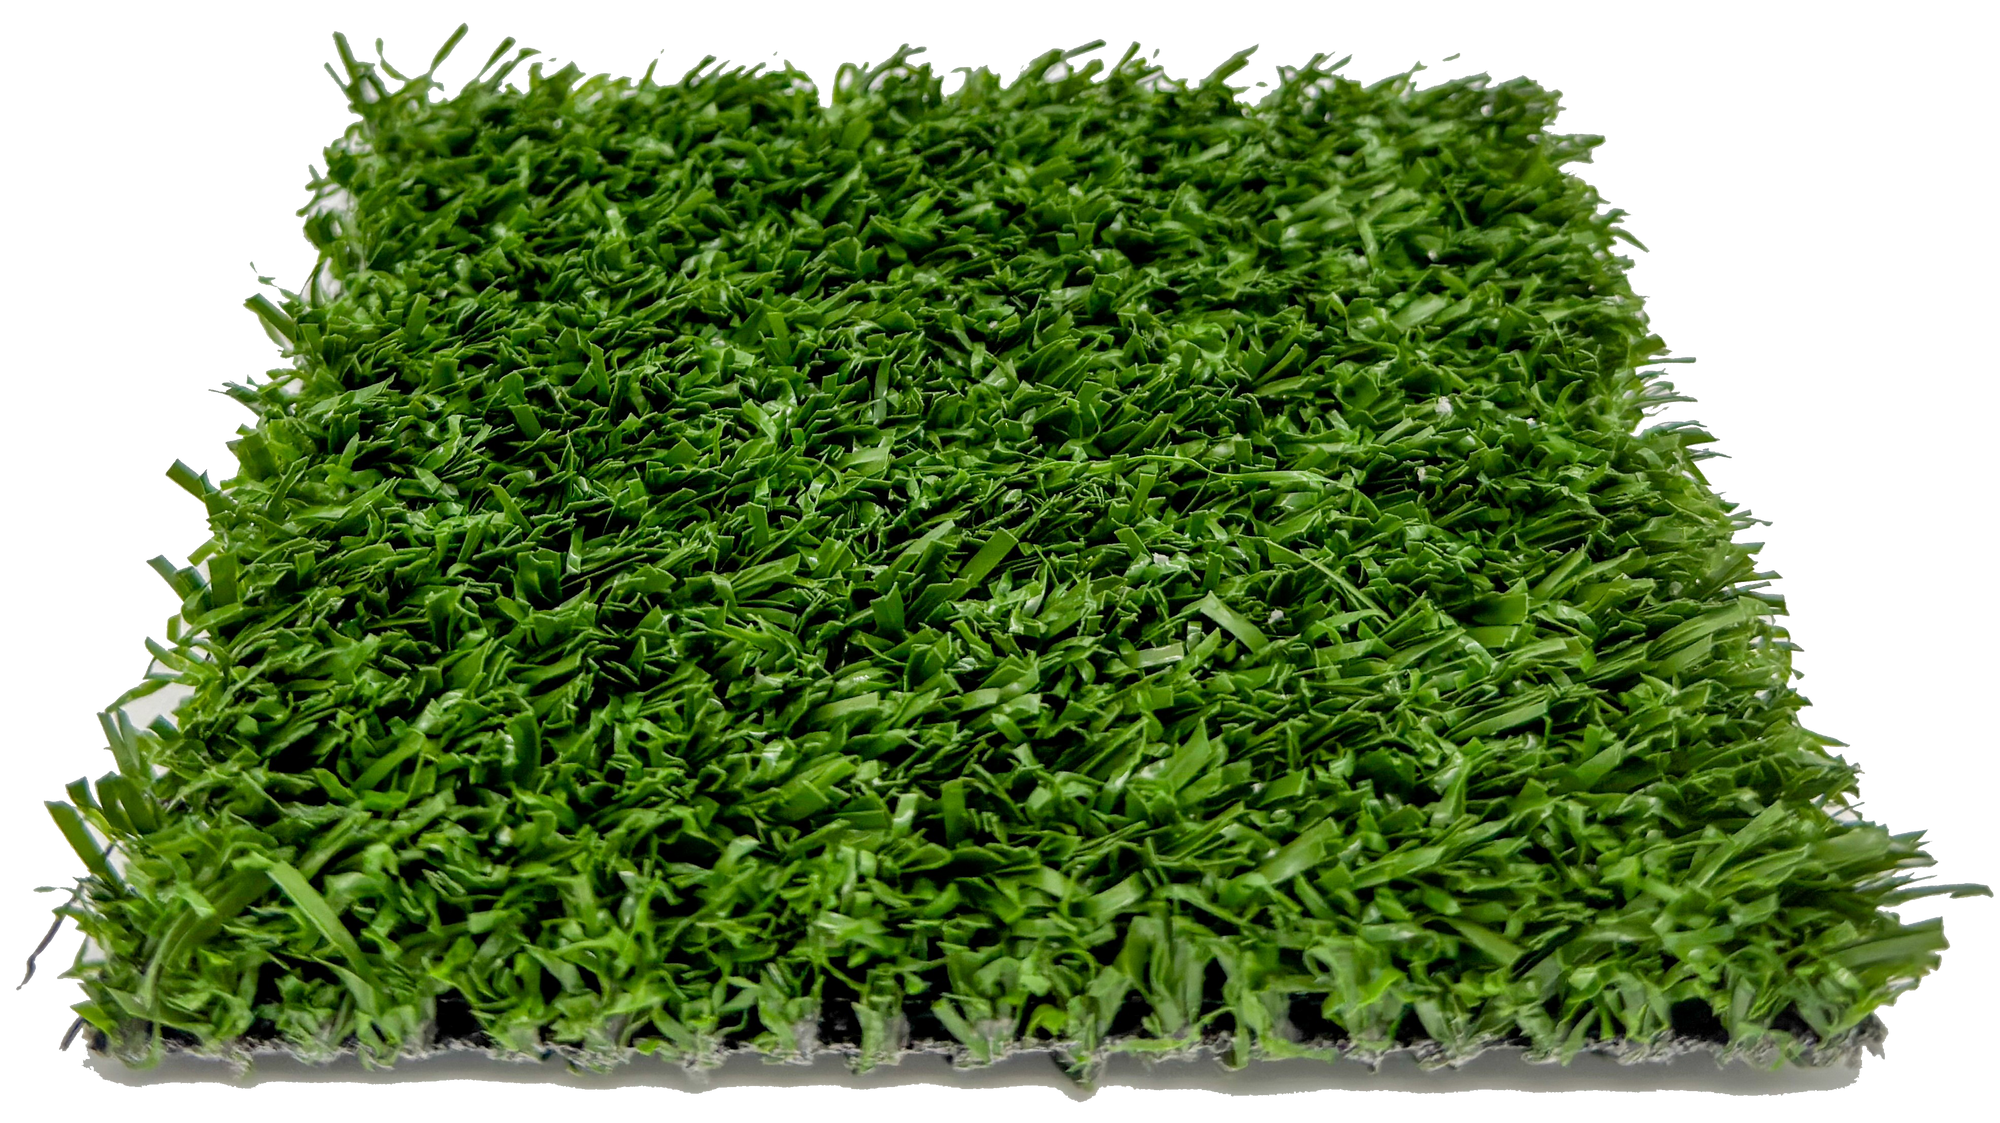 Spring Fresh-Synthetic Grass Turf-Shawgrass-Shaw-300-Urethane-0.75-KNB Mills